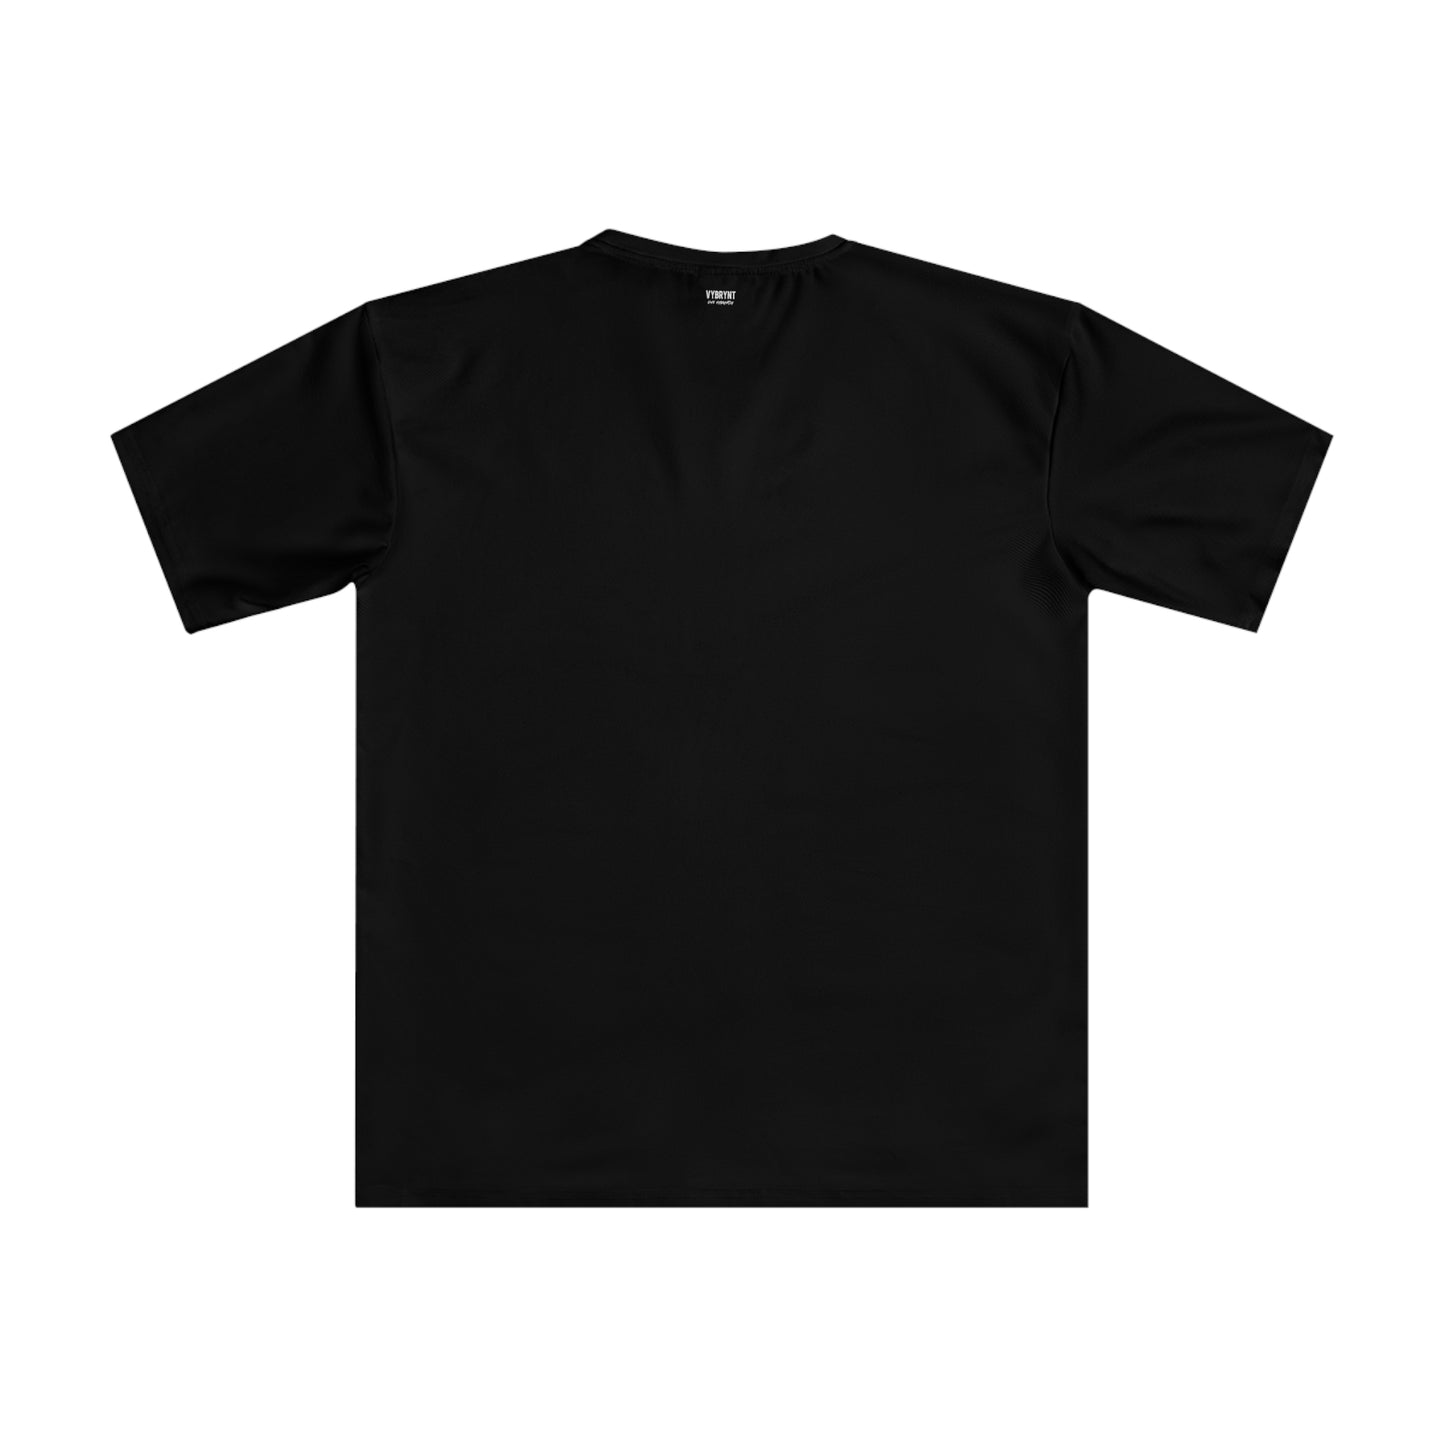 Caffeine Love Men's Black T-shirt